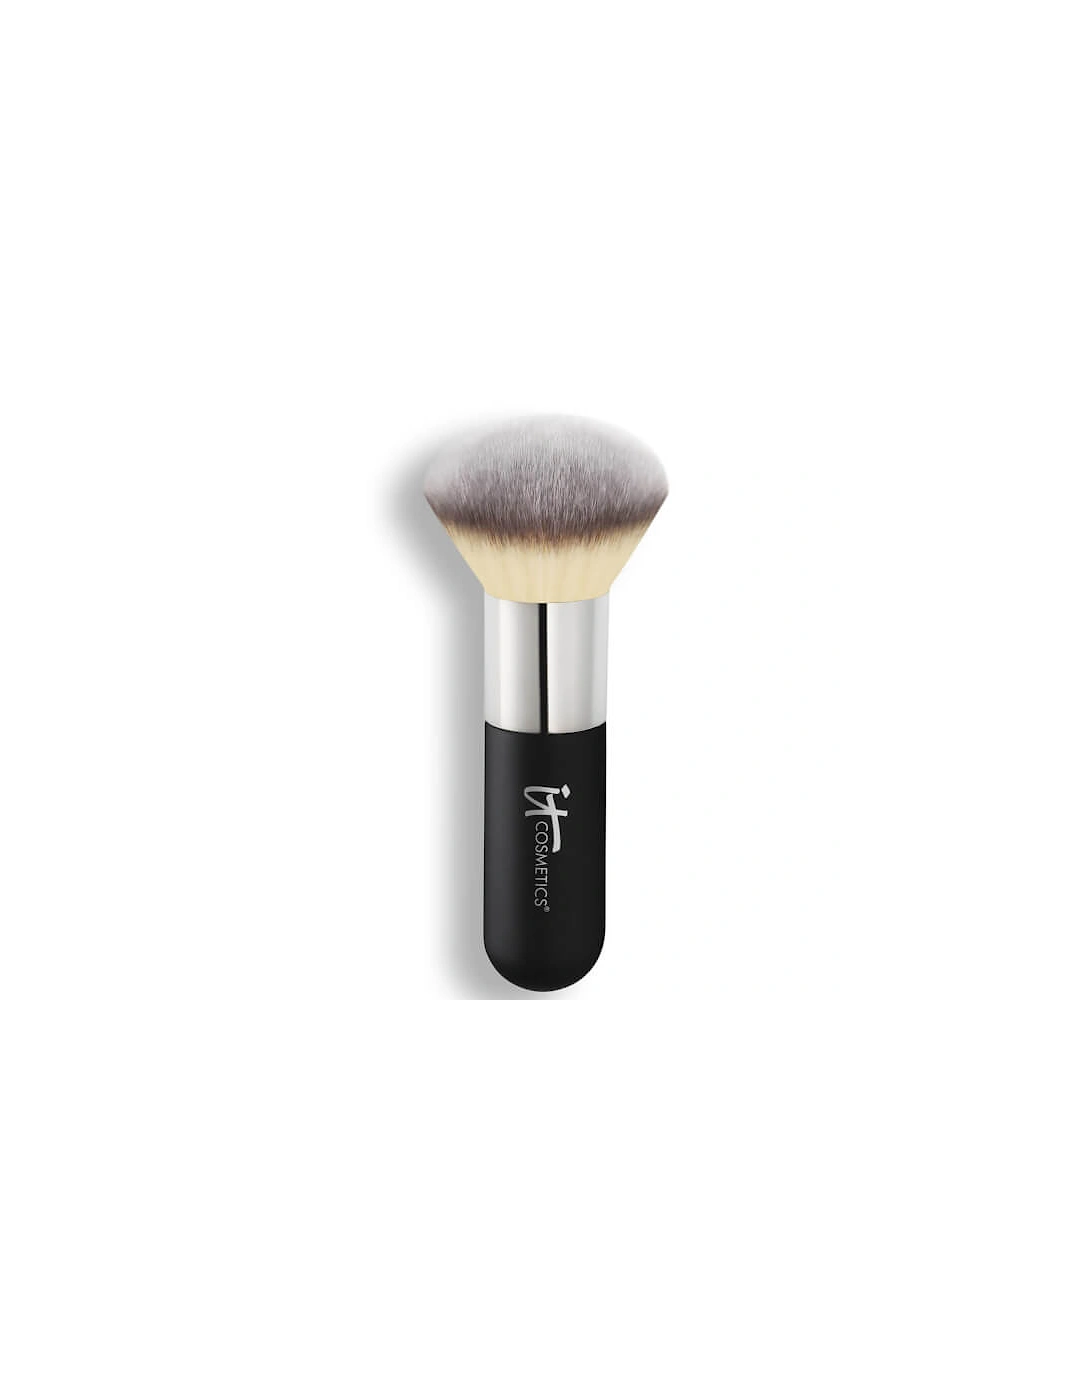 Heavenly Luxe Airbrush Powder and Bronzer Brush #1, 2 of 1